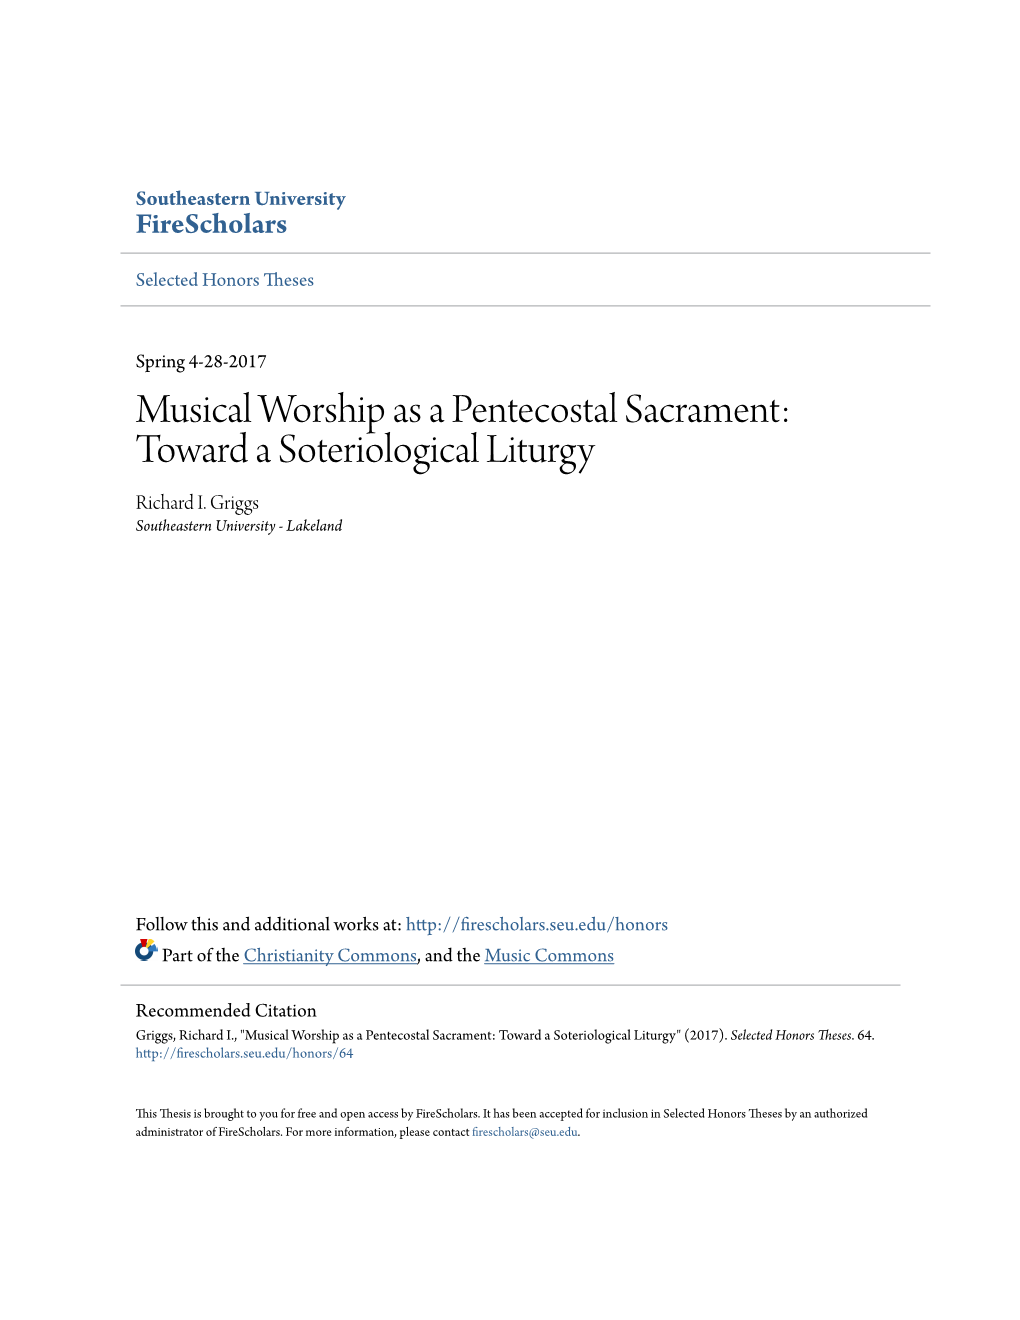 Musical Worship As a Pentecostal Sacrament: Toward a Soteriological Liturgy Richard I